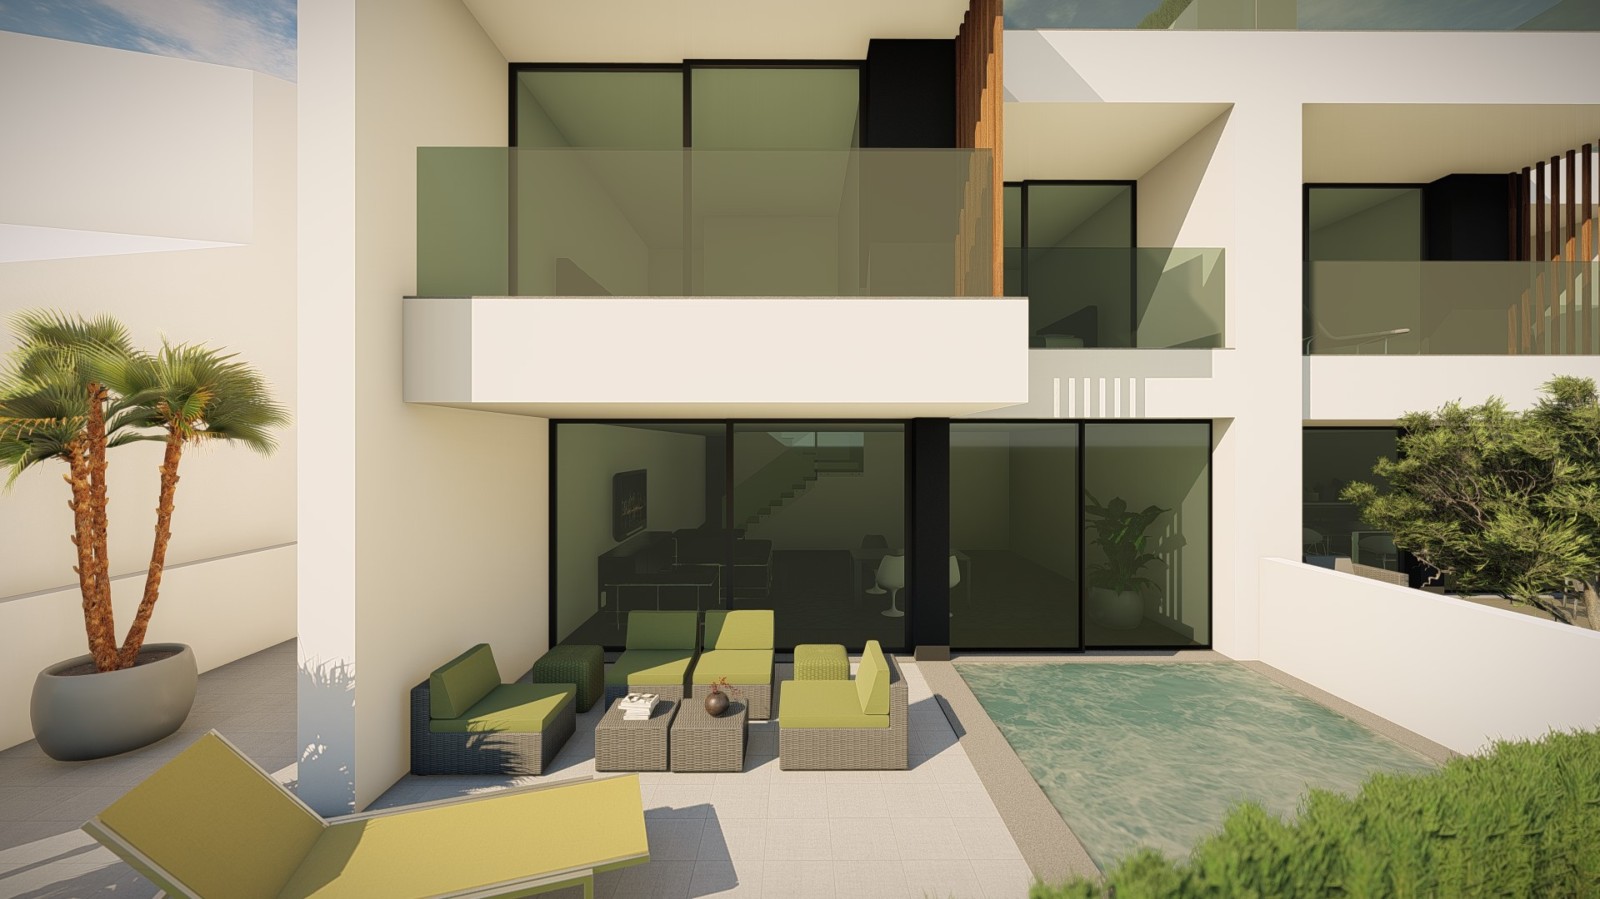 4 Bedroom Semi-detached villa with swimming pool, for sale, in Portimão, Algarve_218609